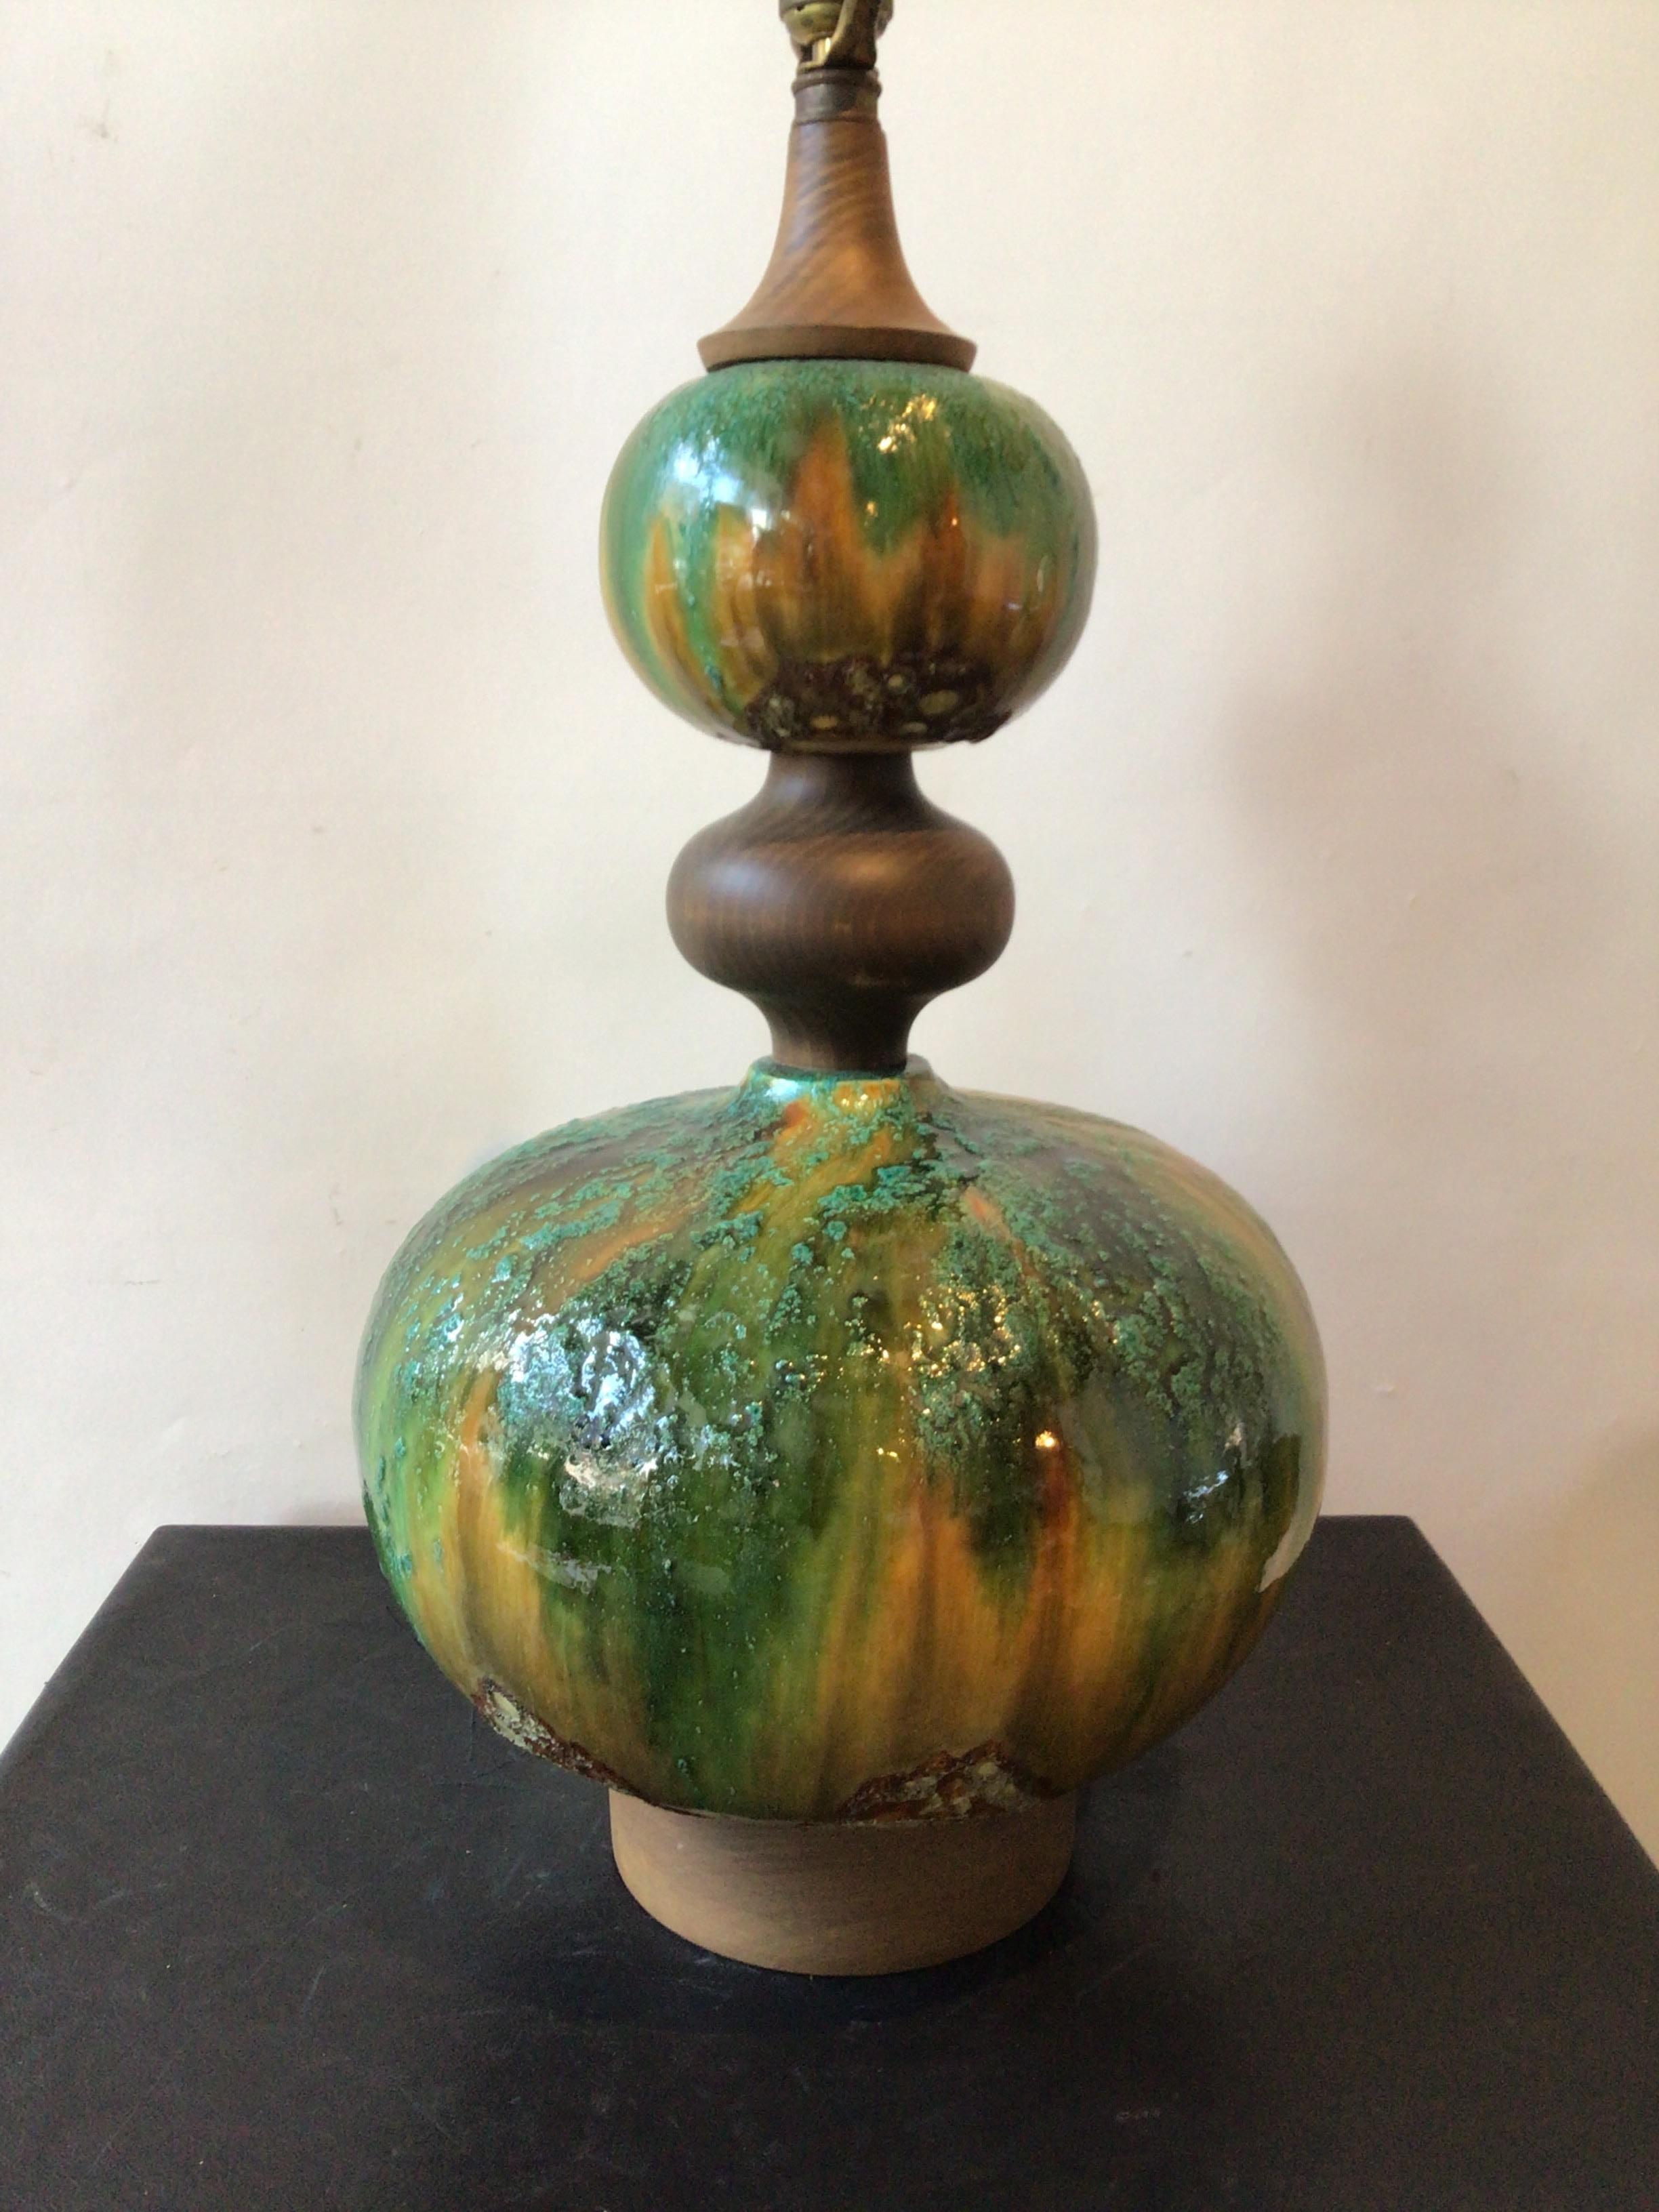 1960s textured ceramic lamp on wood base.